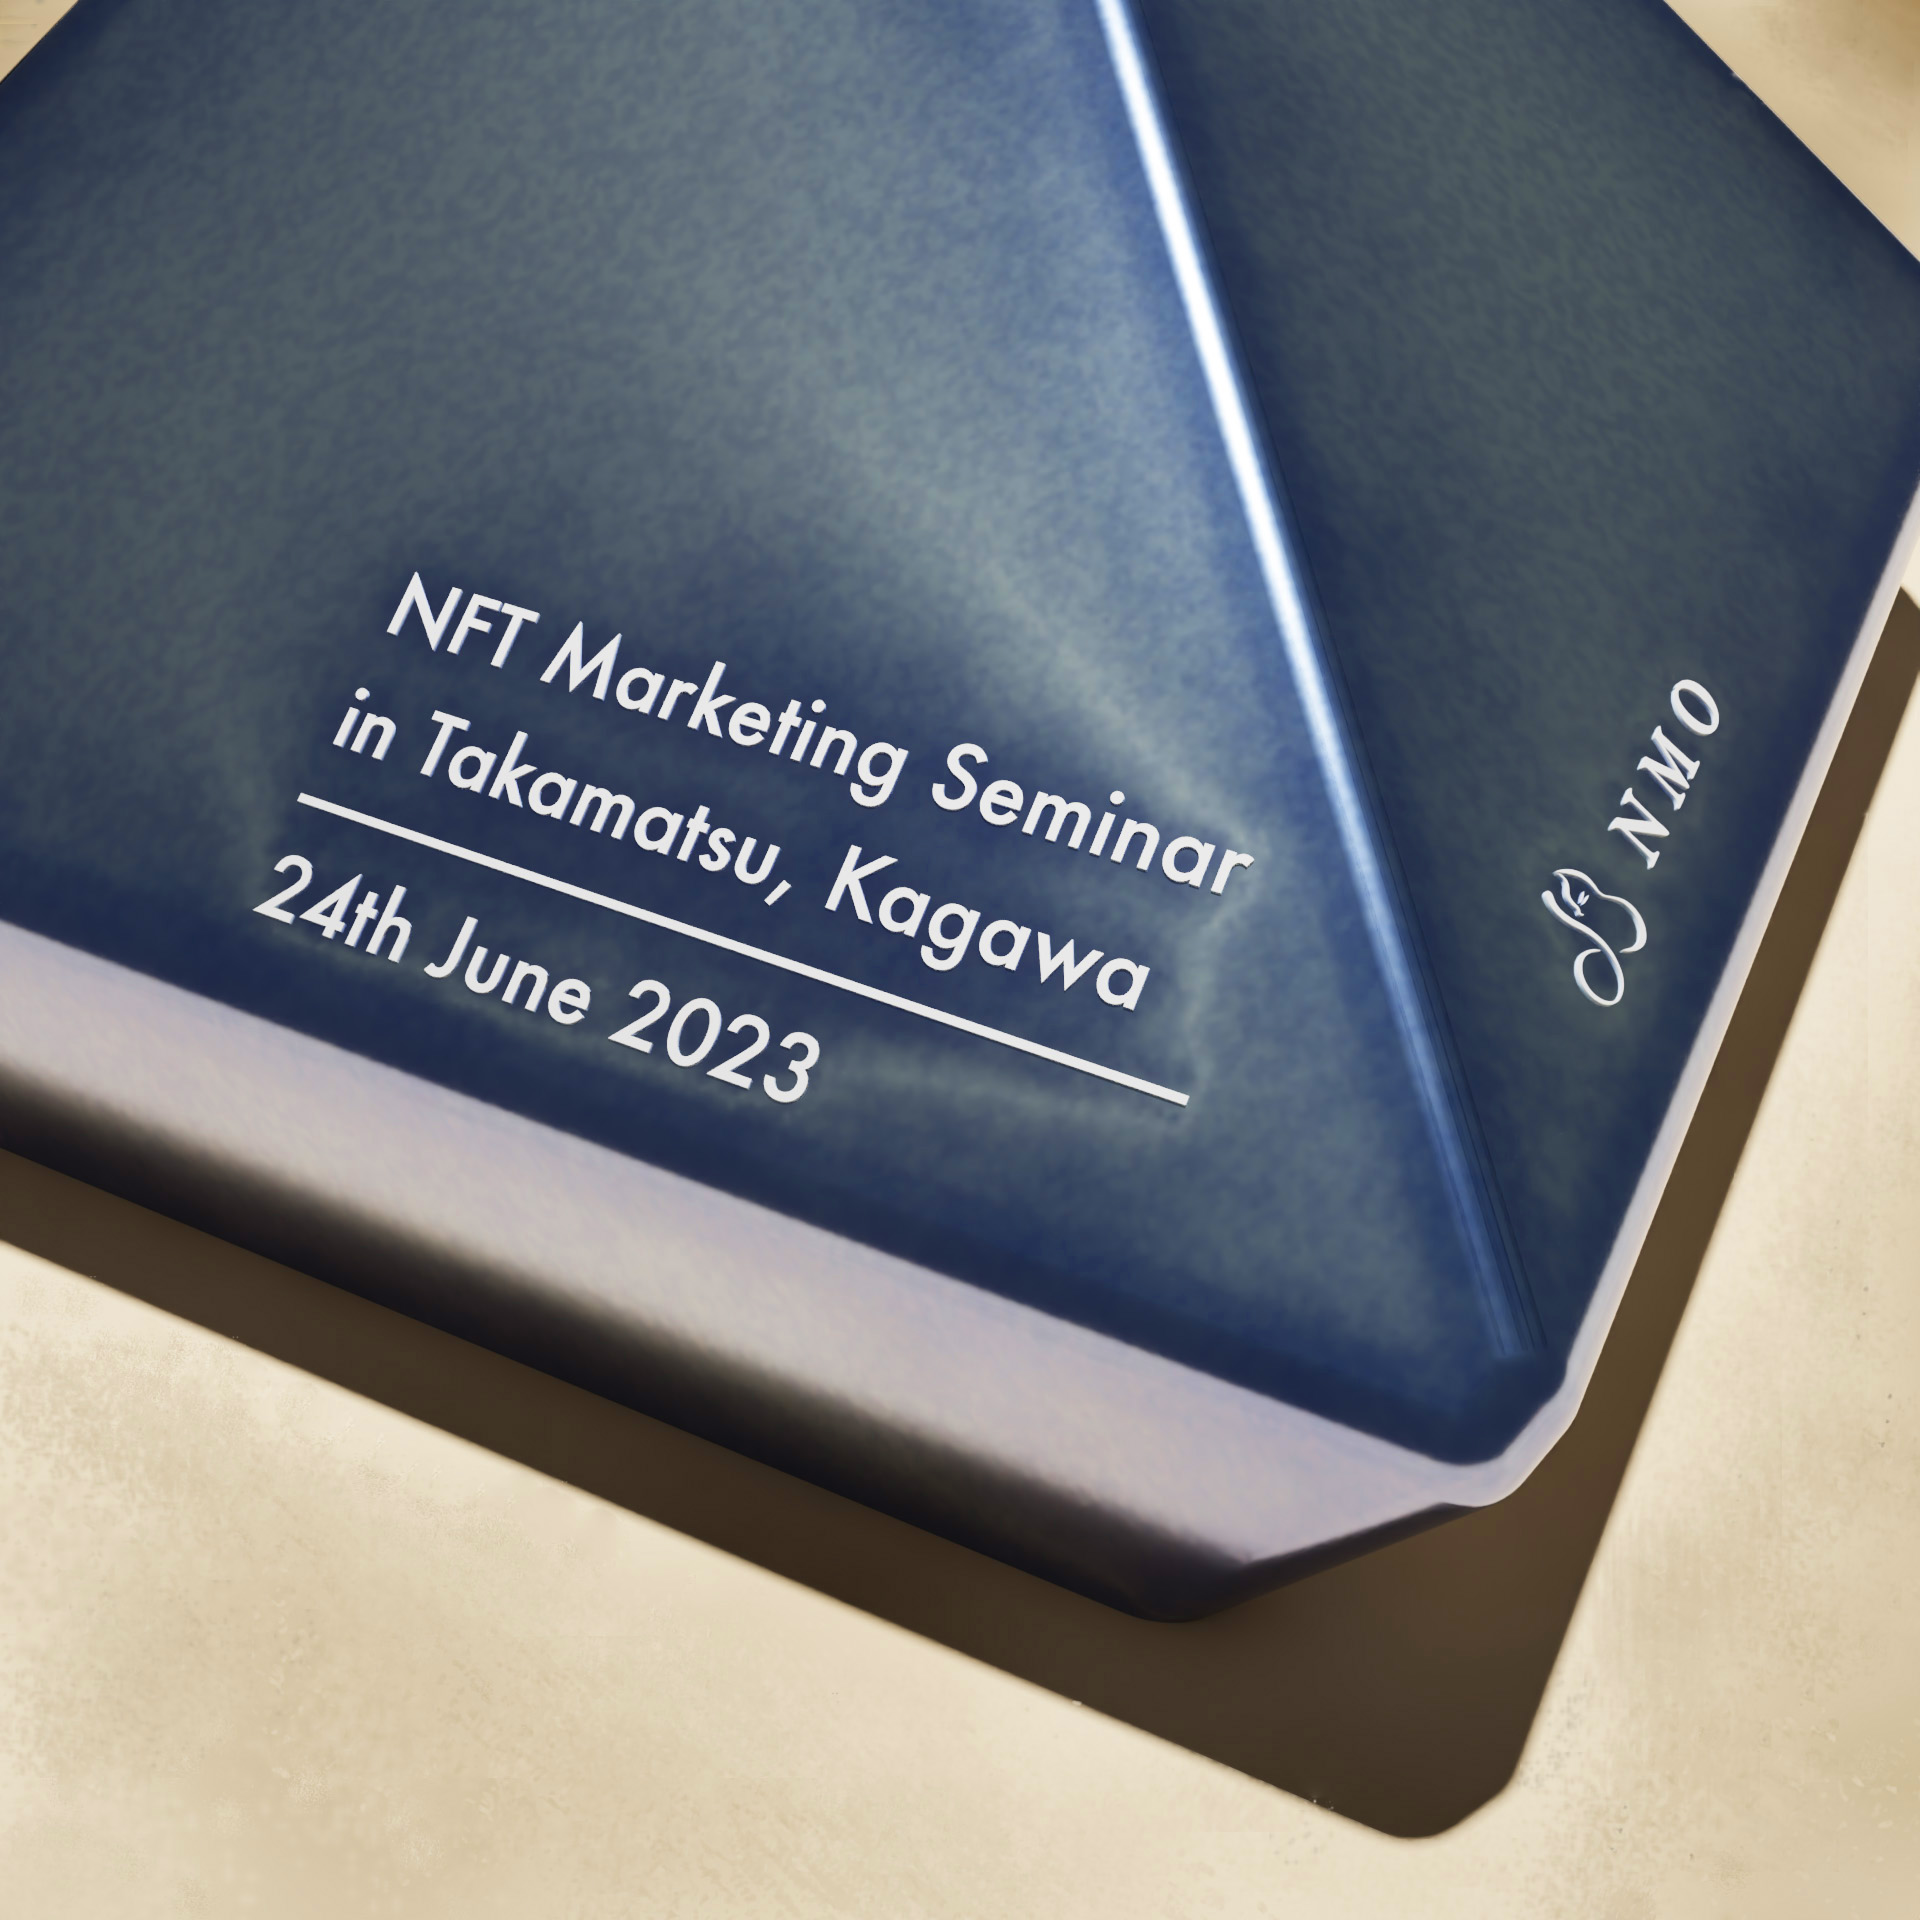 NFT Marketing Seminar on 2023/06/24